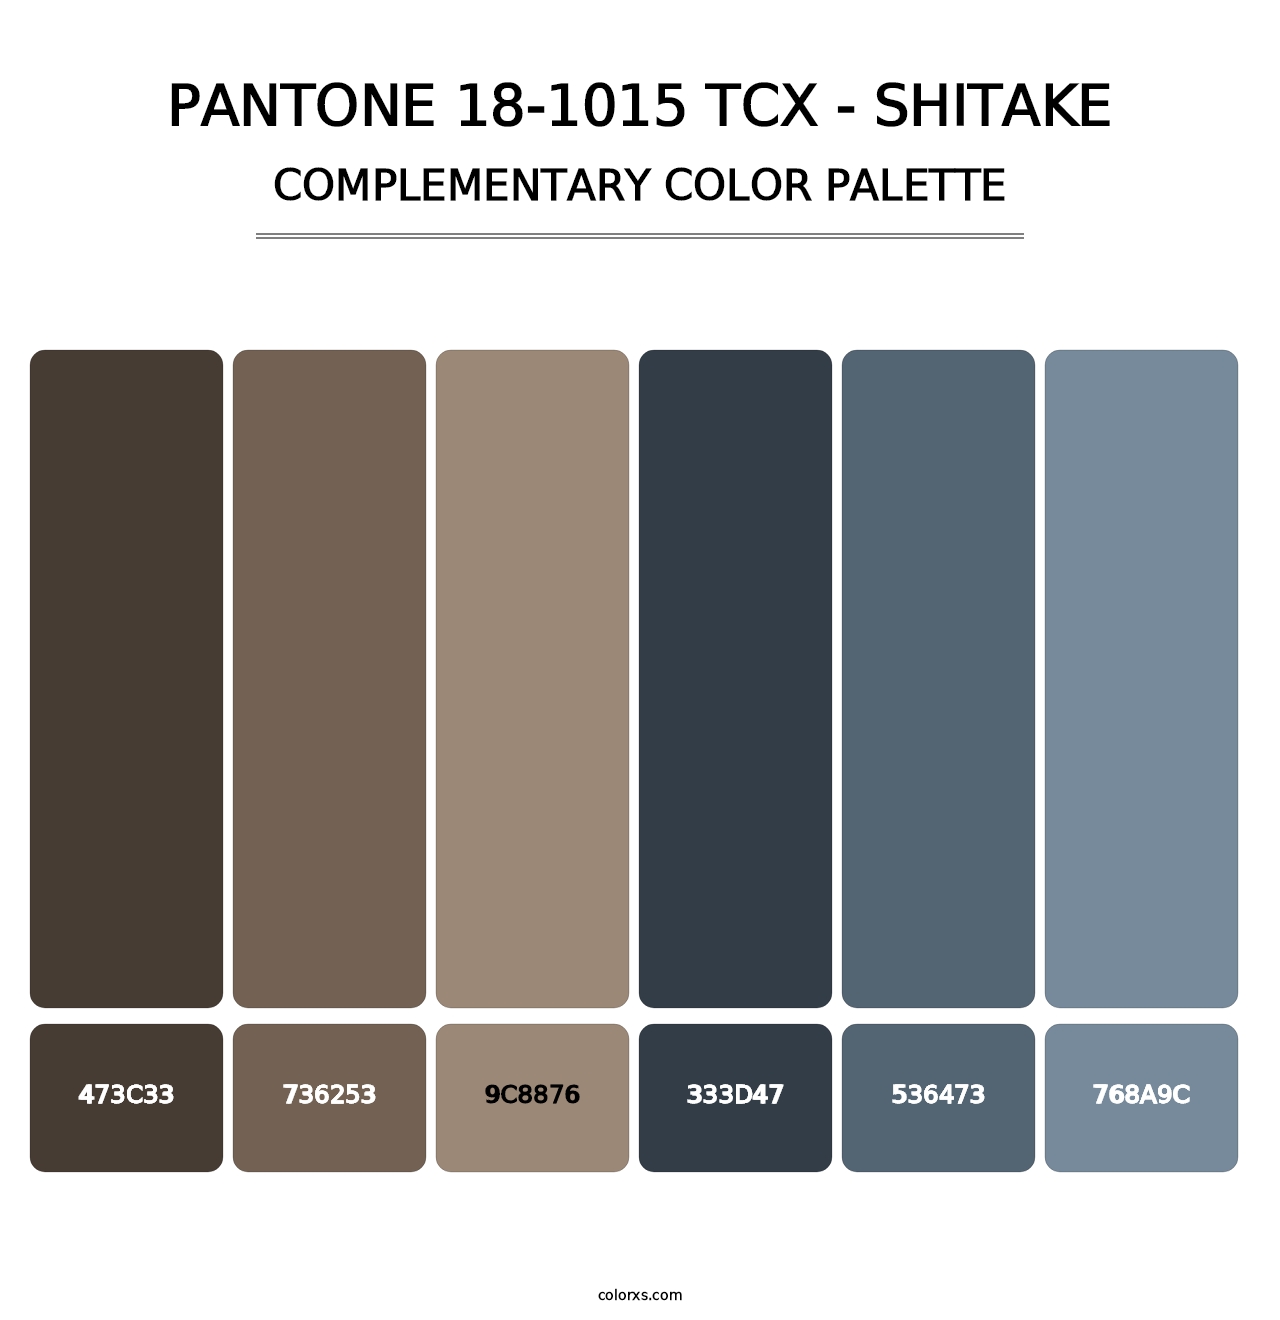 PANTONE 18-1015 TCX - Shitake - Complementary Color Palette